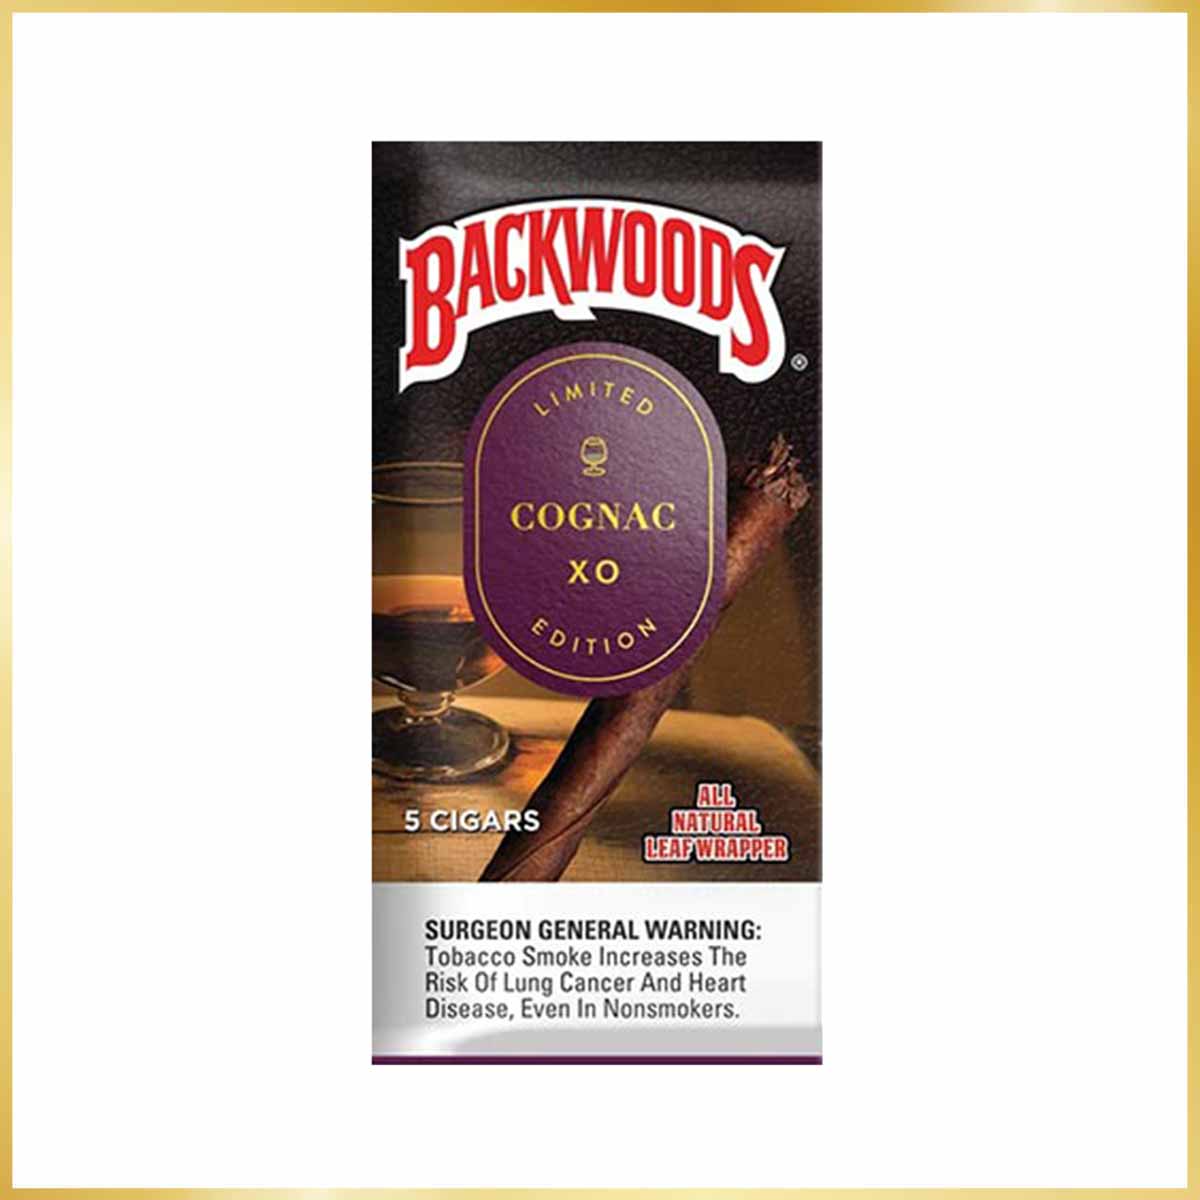 backwoods-cognac-XO-edition-limited